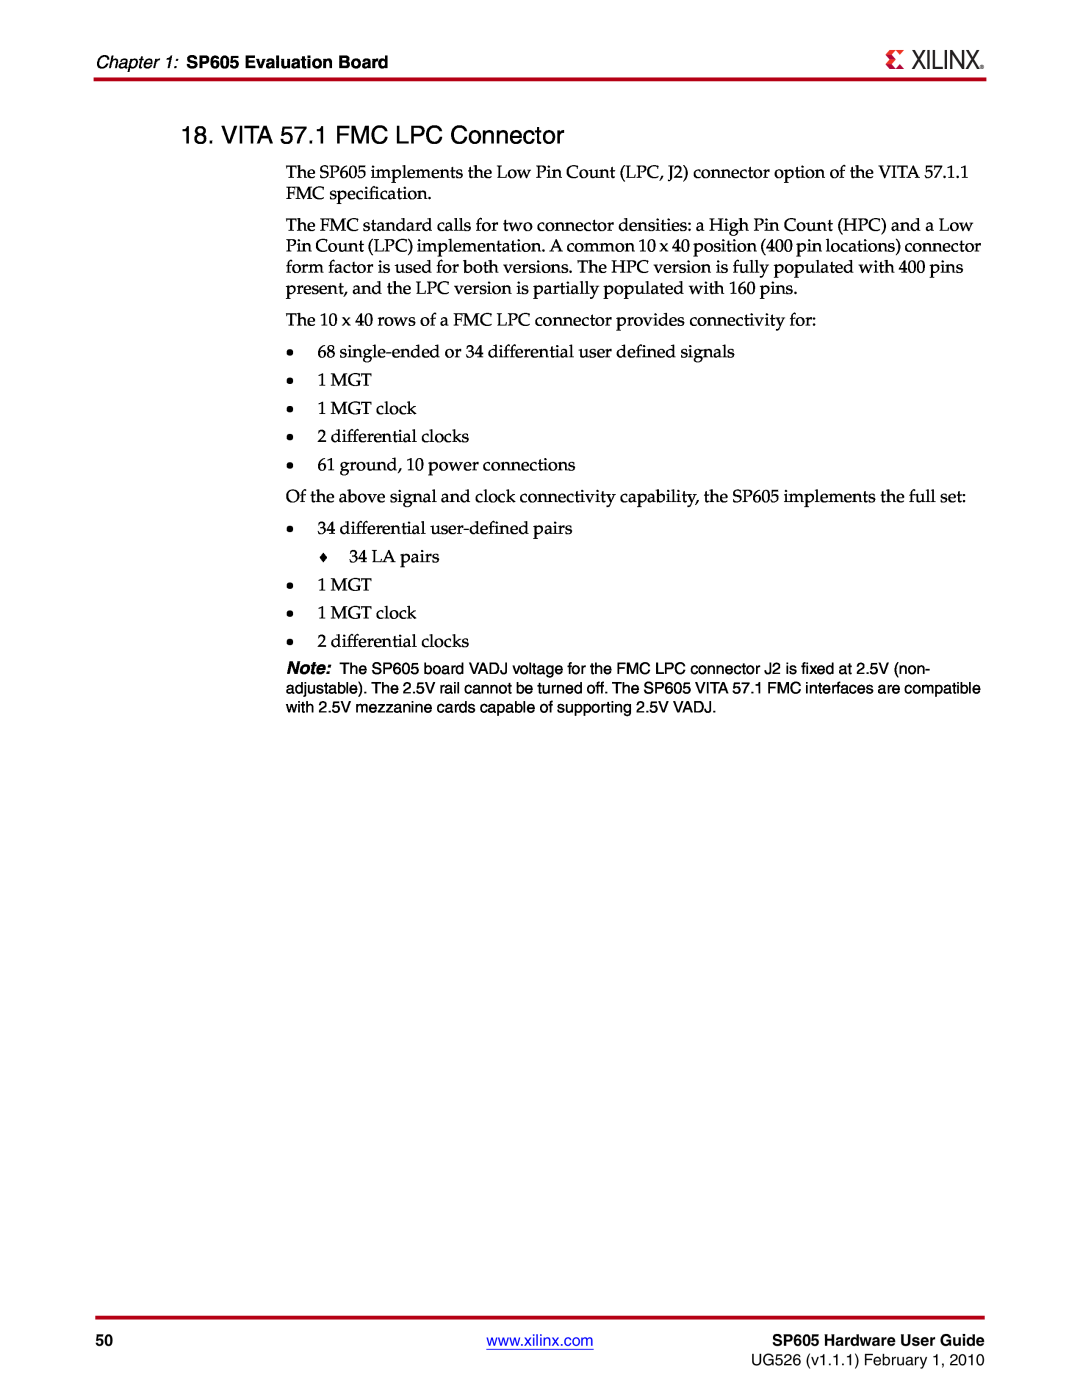 Xilinx manual VITA 57.1 FMC LPC Connector, SP605 Evaluation Board 